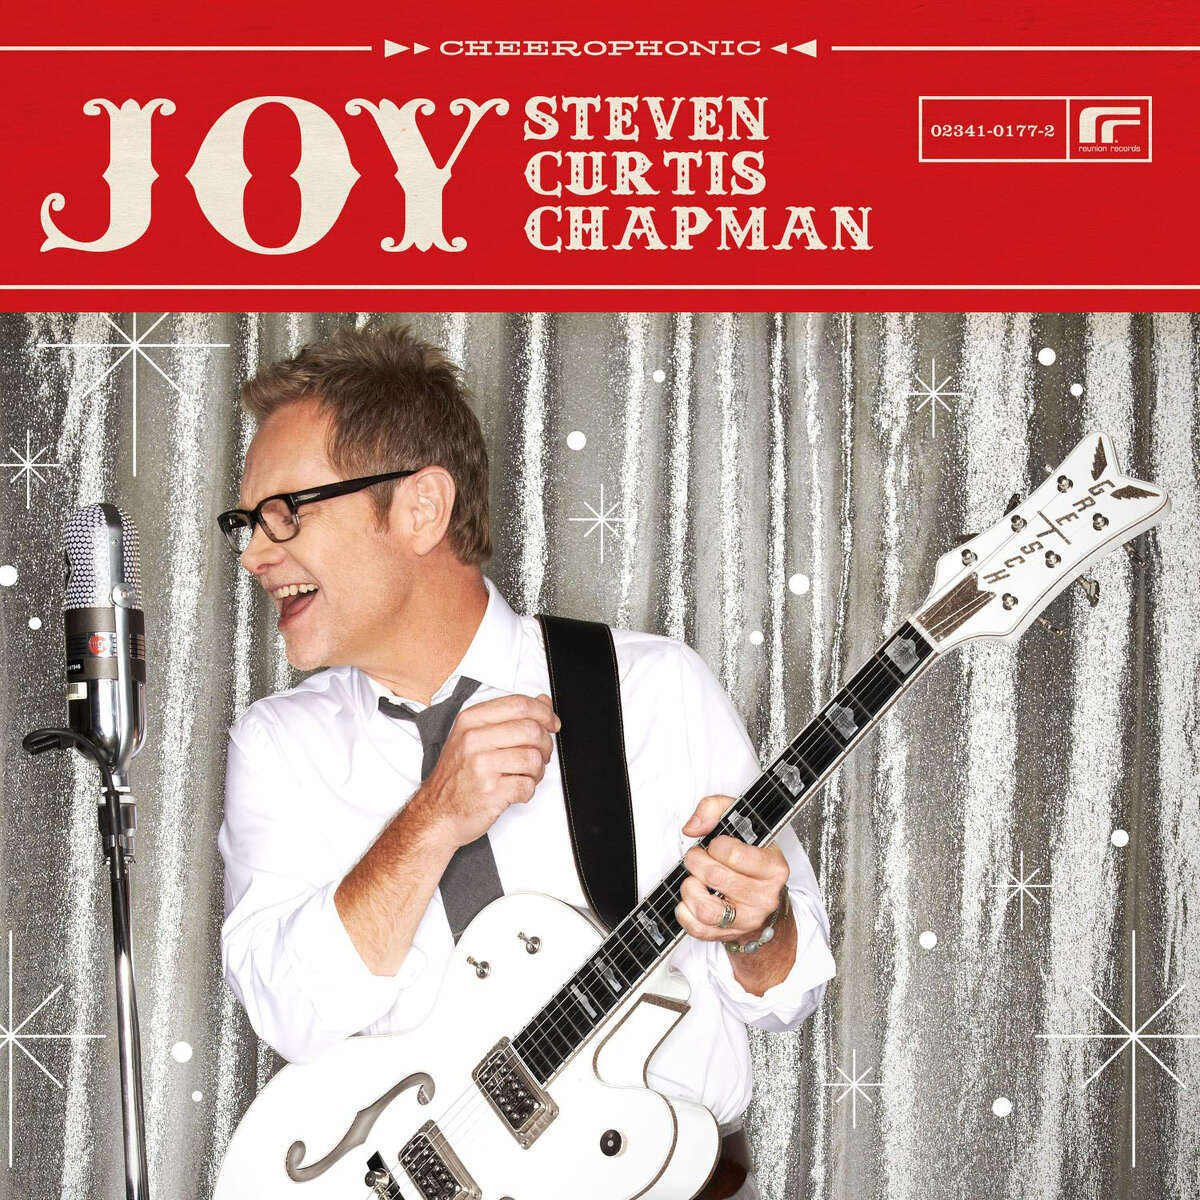 Steven Curtis Chapman starts Christmas tour in Houston